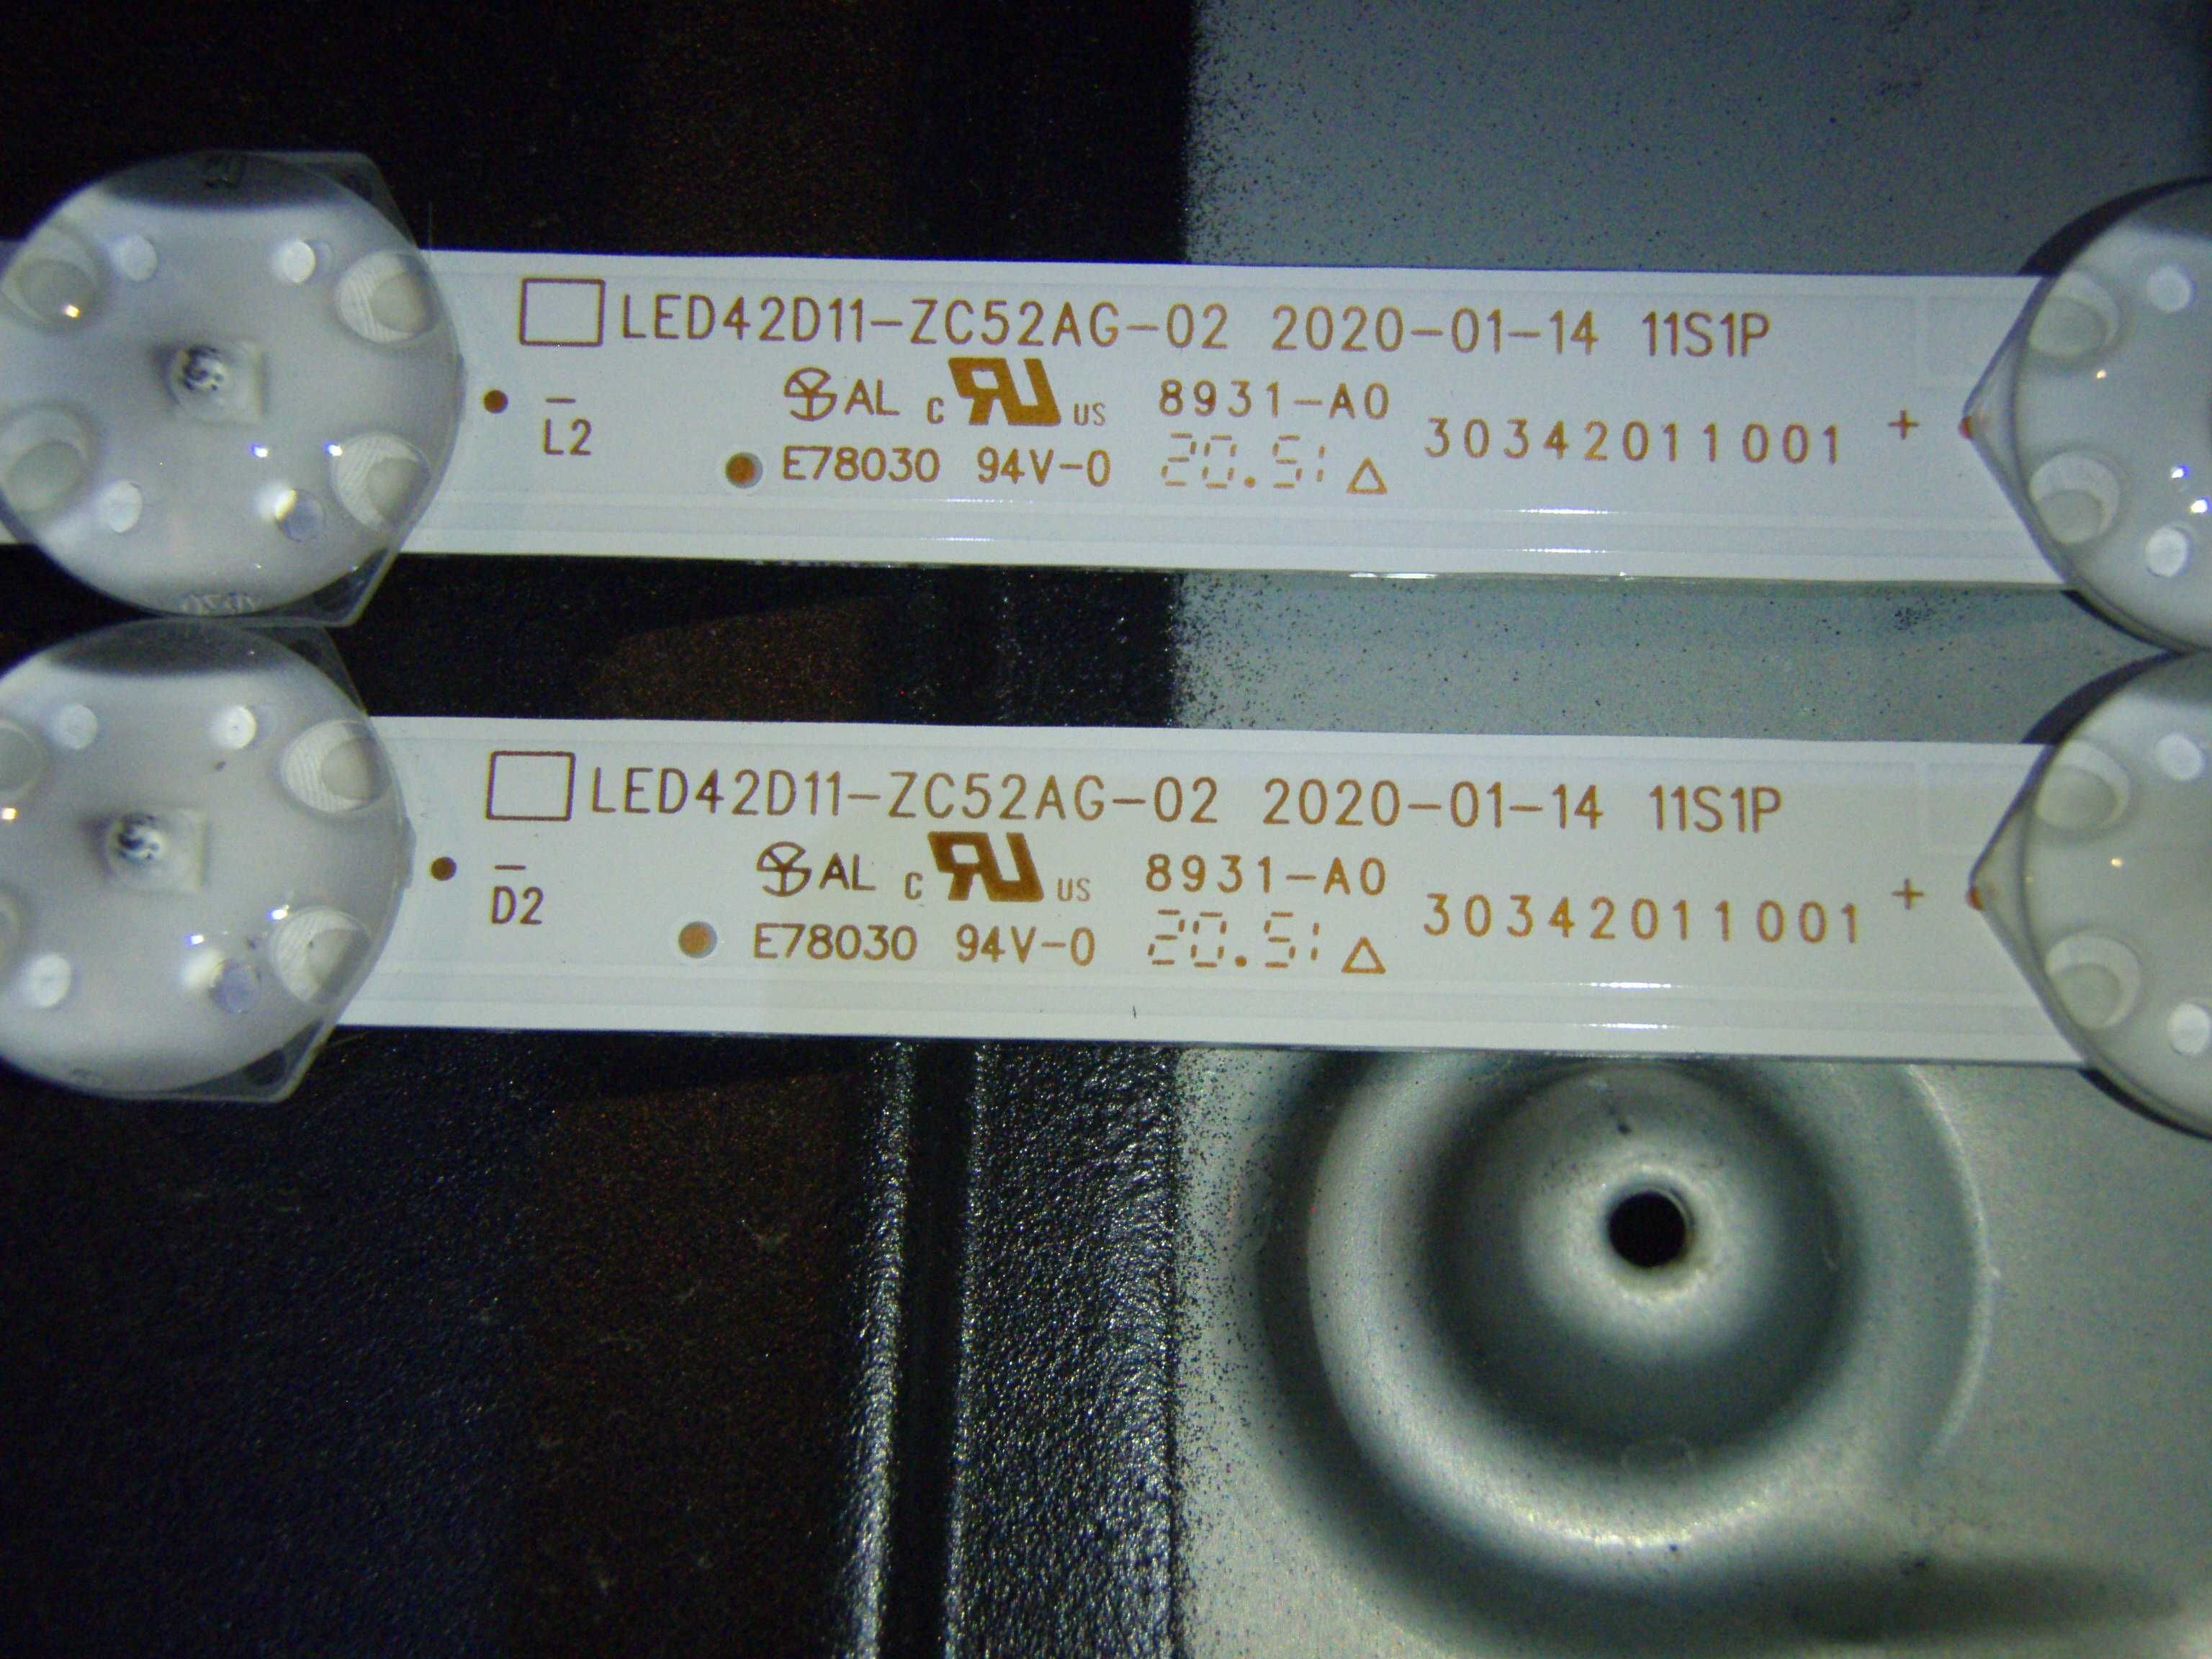 MSD66830-ZC01-01 TV3903-ZC02-01 LED WT21M261 p Allview 42ePlay6000-F/1